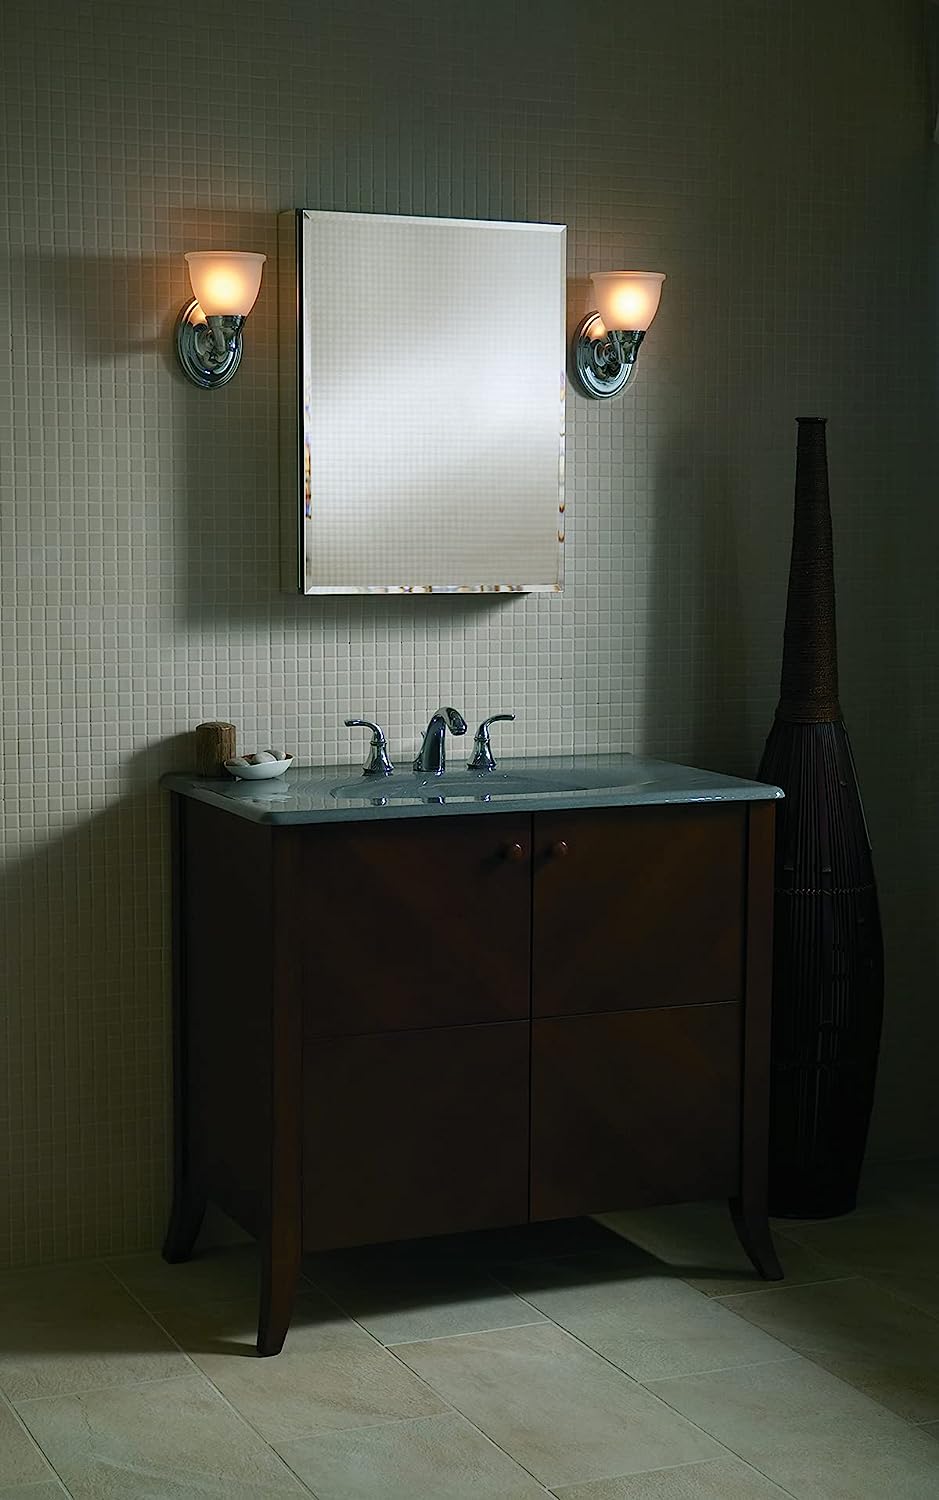 KOHLER 20" W x 26" H Single-Door Bathroom Medicine Cabinet with Mirror - $85